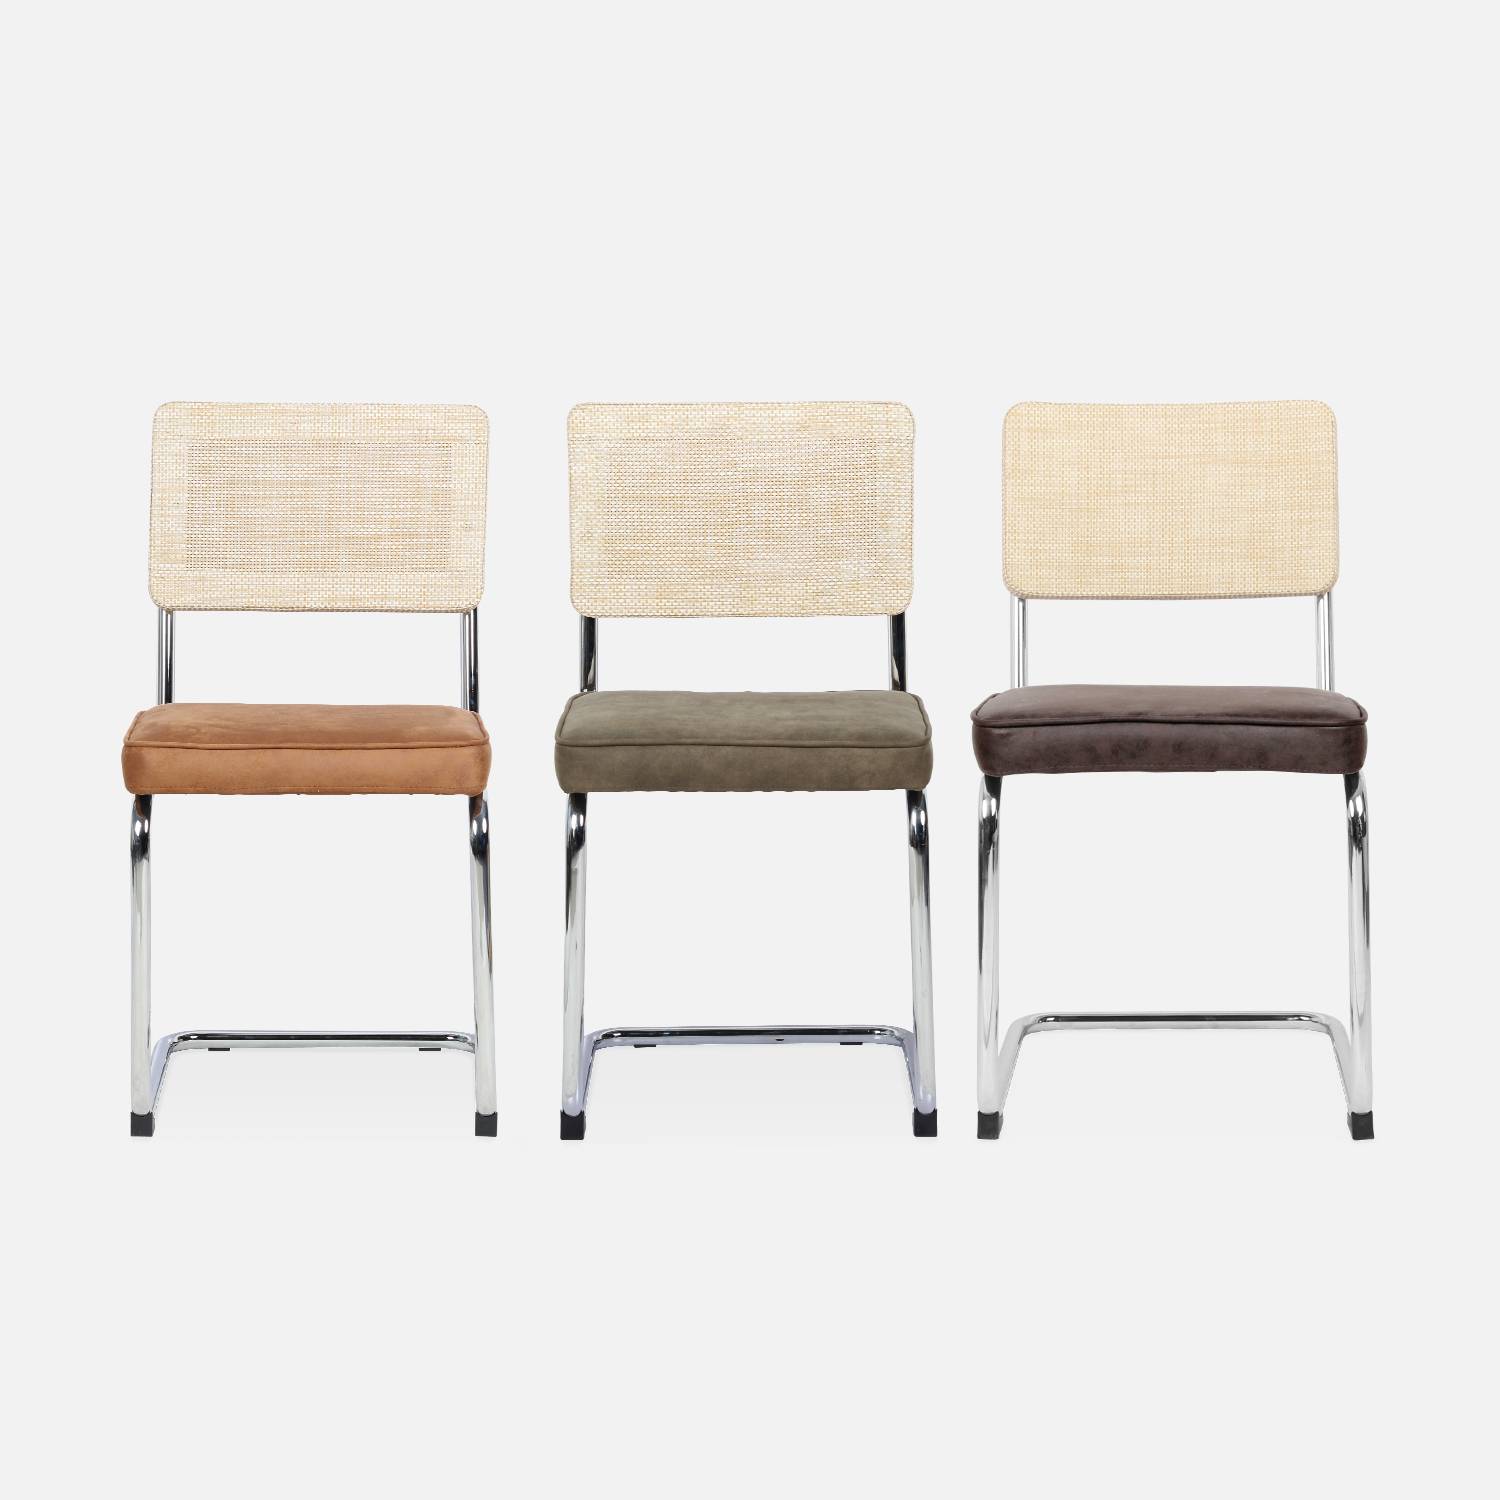 2 chaises cantilever - Maja - tissu kaki et résine effet rotin, 46 x 54,5 x 84,5cm   Photo9